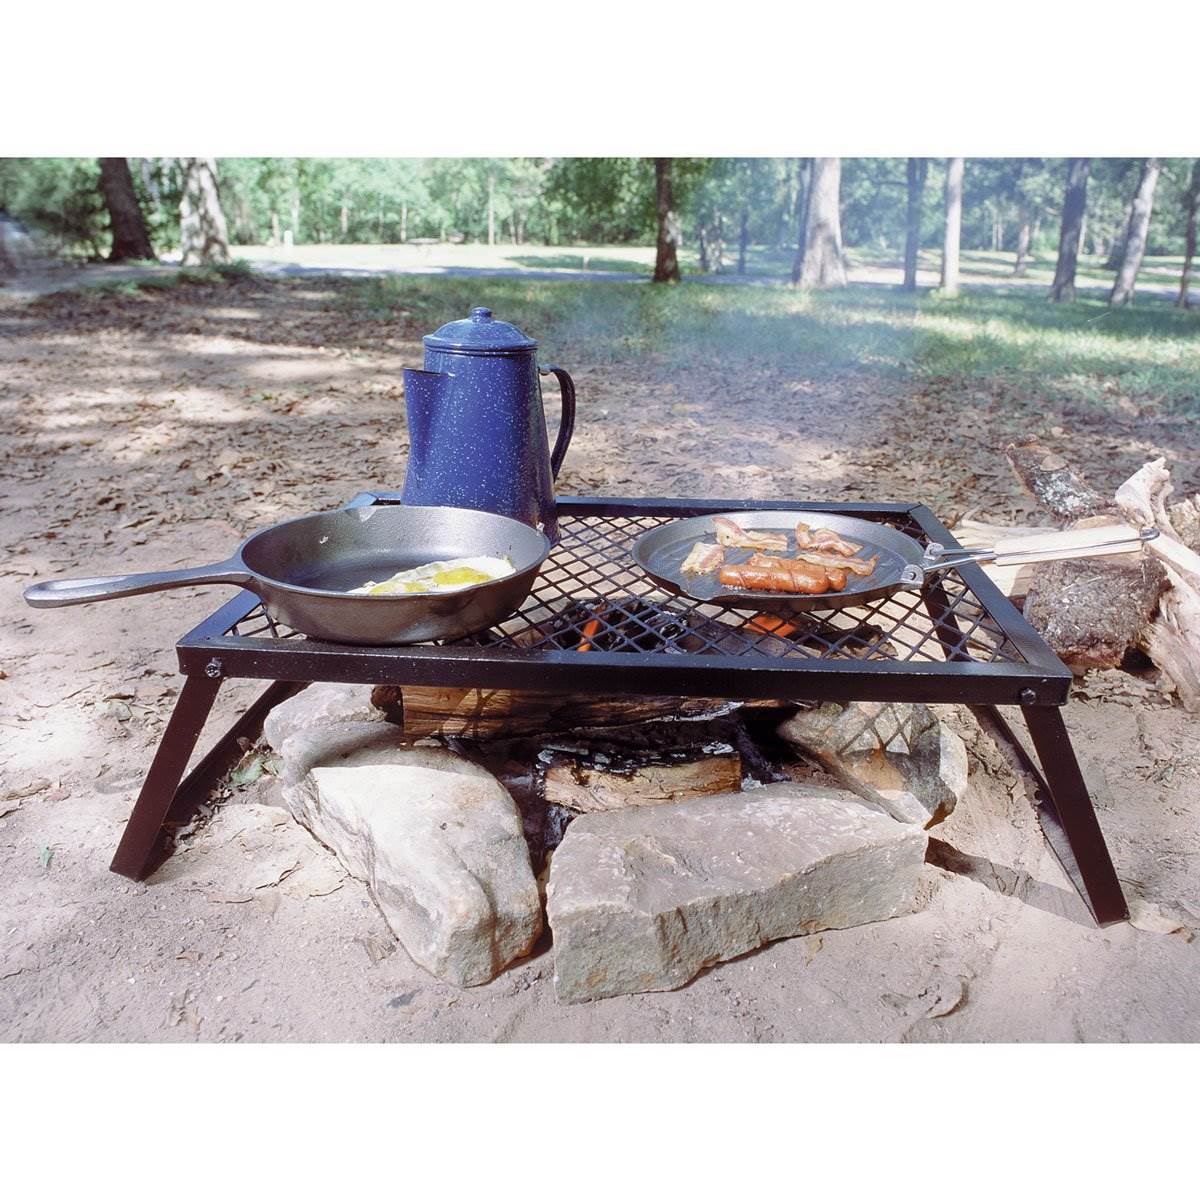 Campfire Grill Heavy Duty Folding Cooking Over Open Fire Welded Steel X-Large